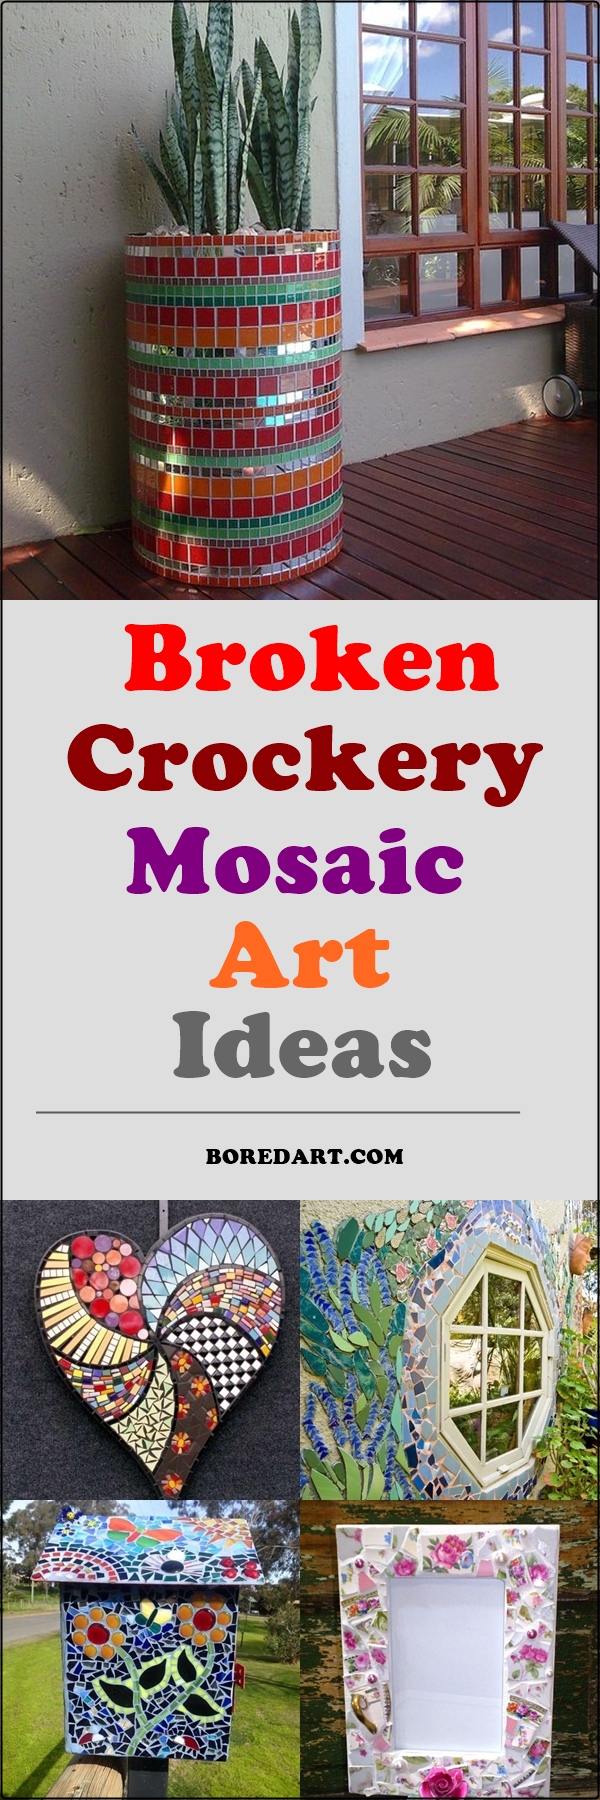 Broken-Crockery-Mosaic-Art-Ideas